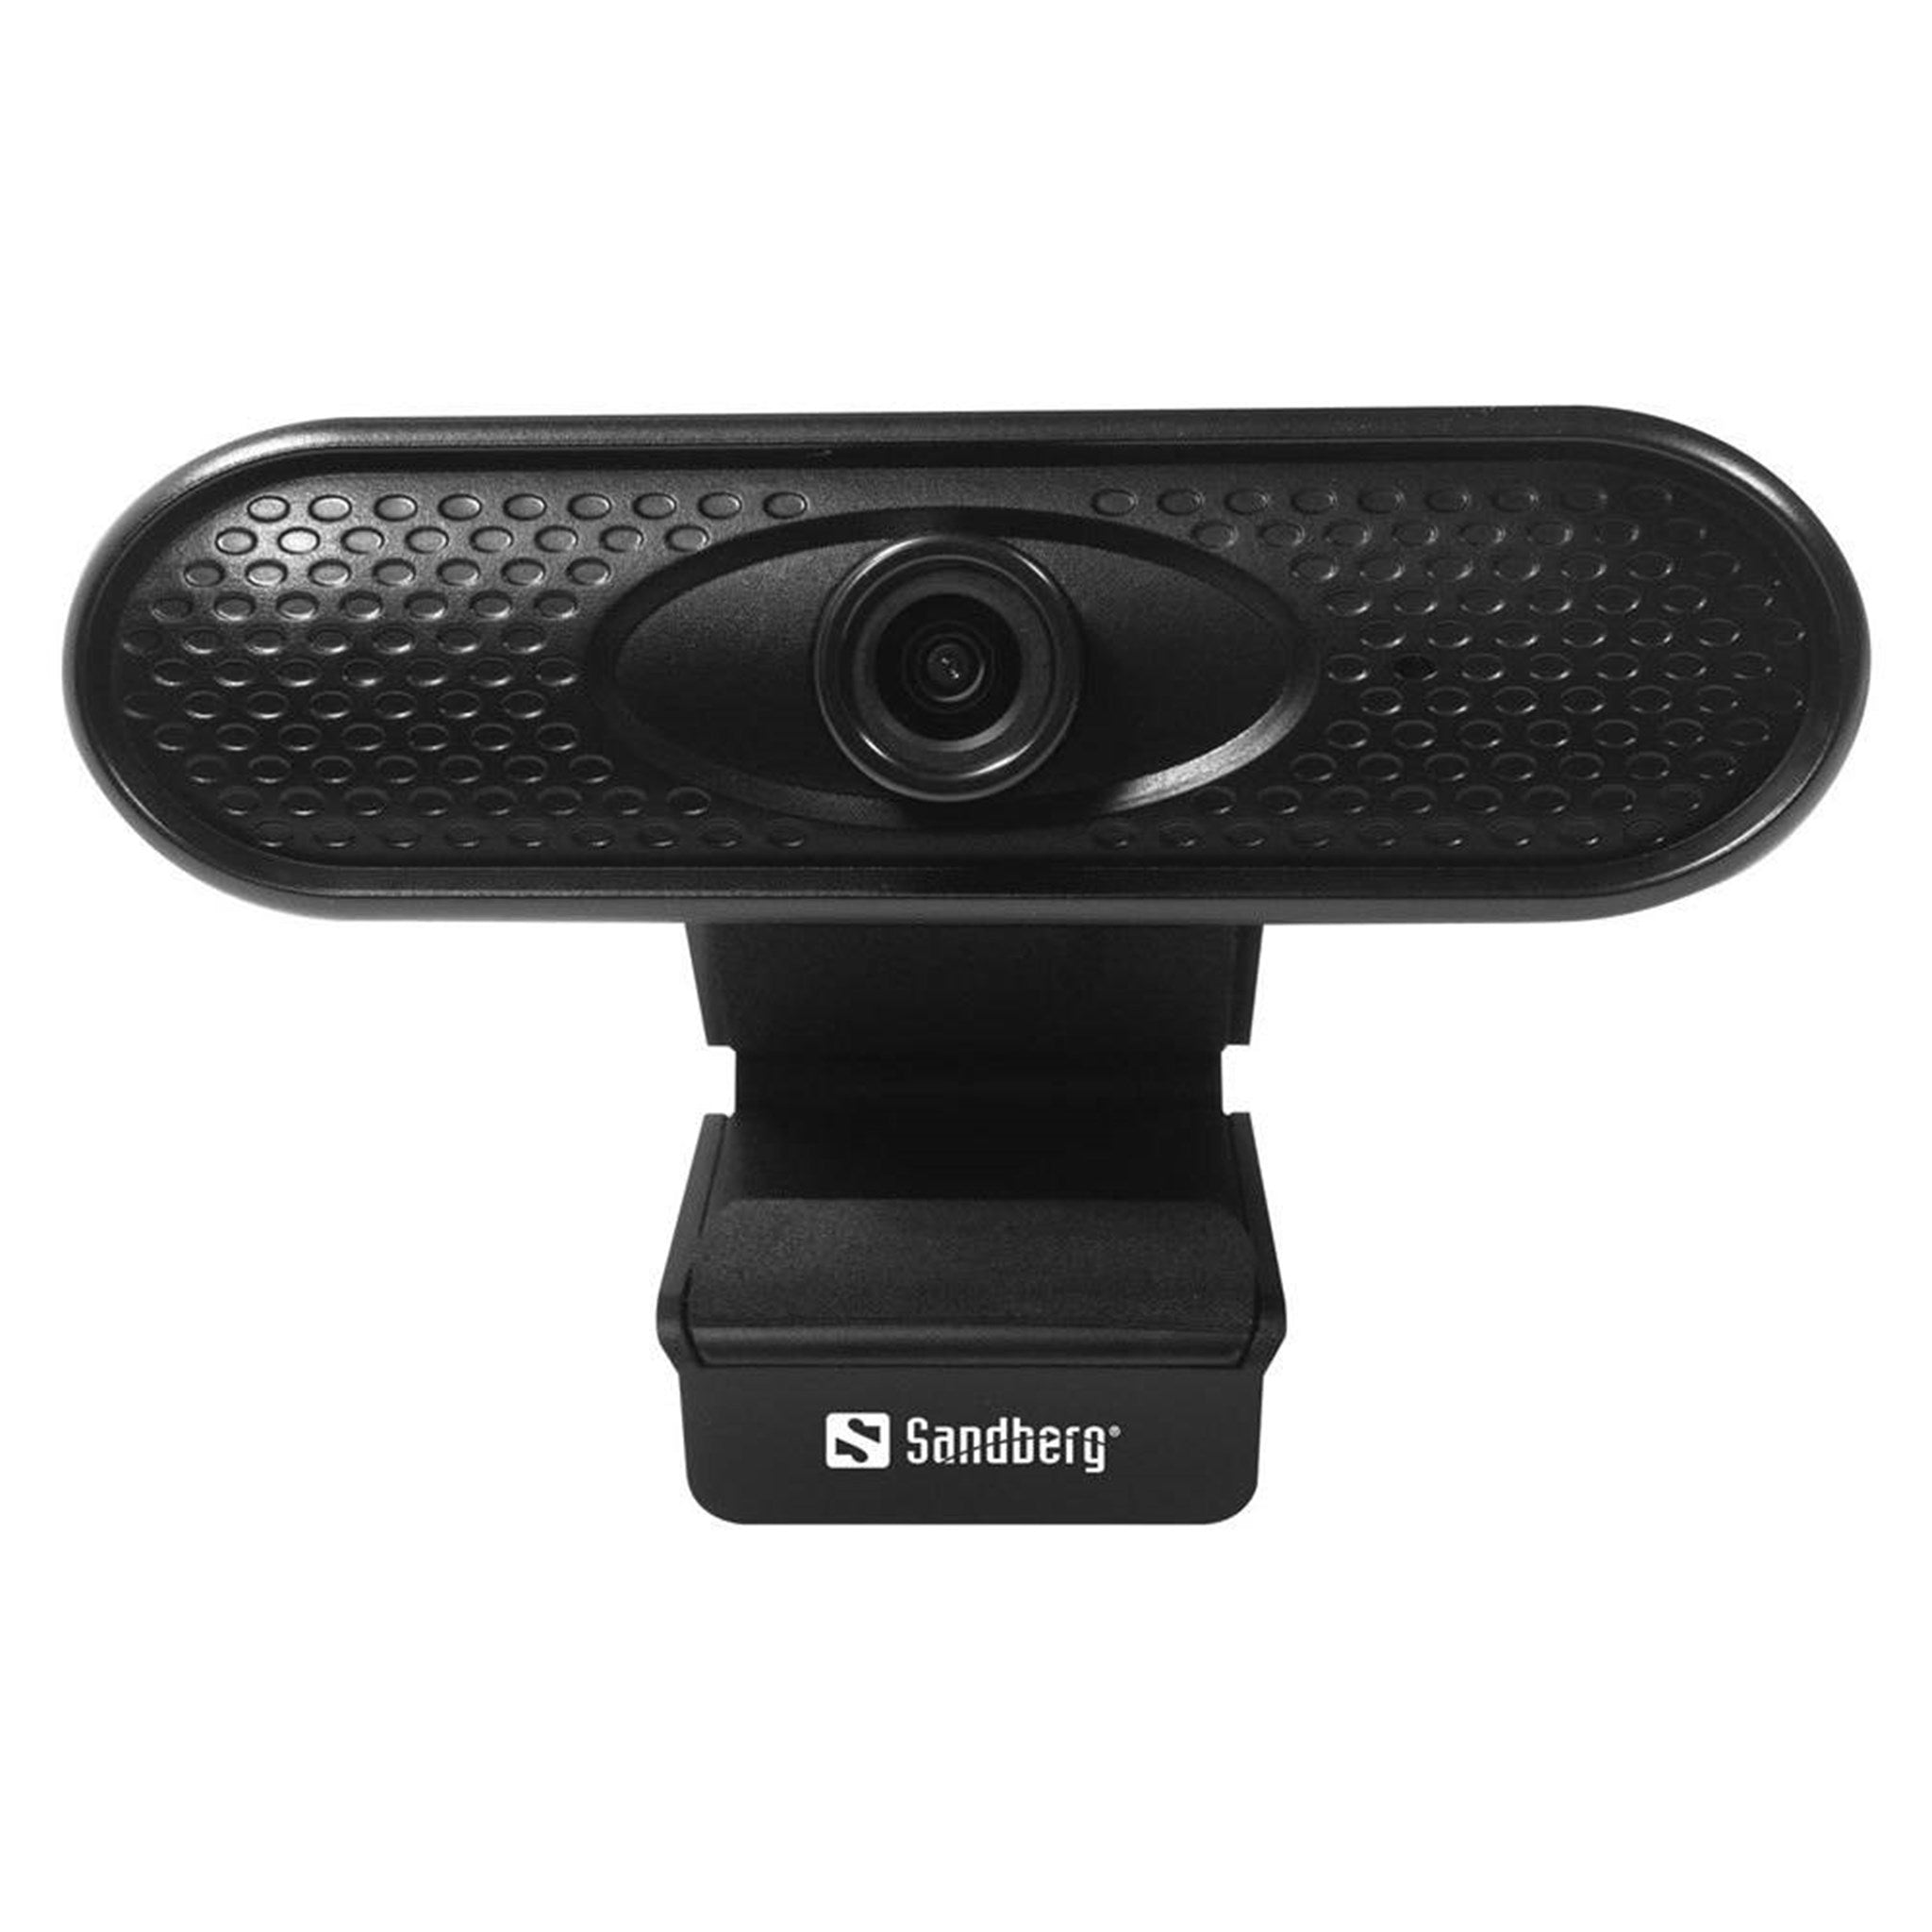 Sandberg-USB-Webcam-1080P-HD-1920-x-1080-pixels-133-96.jpg